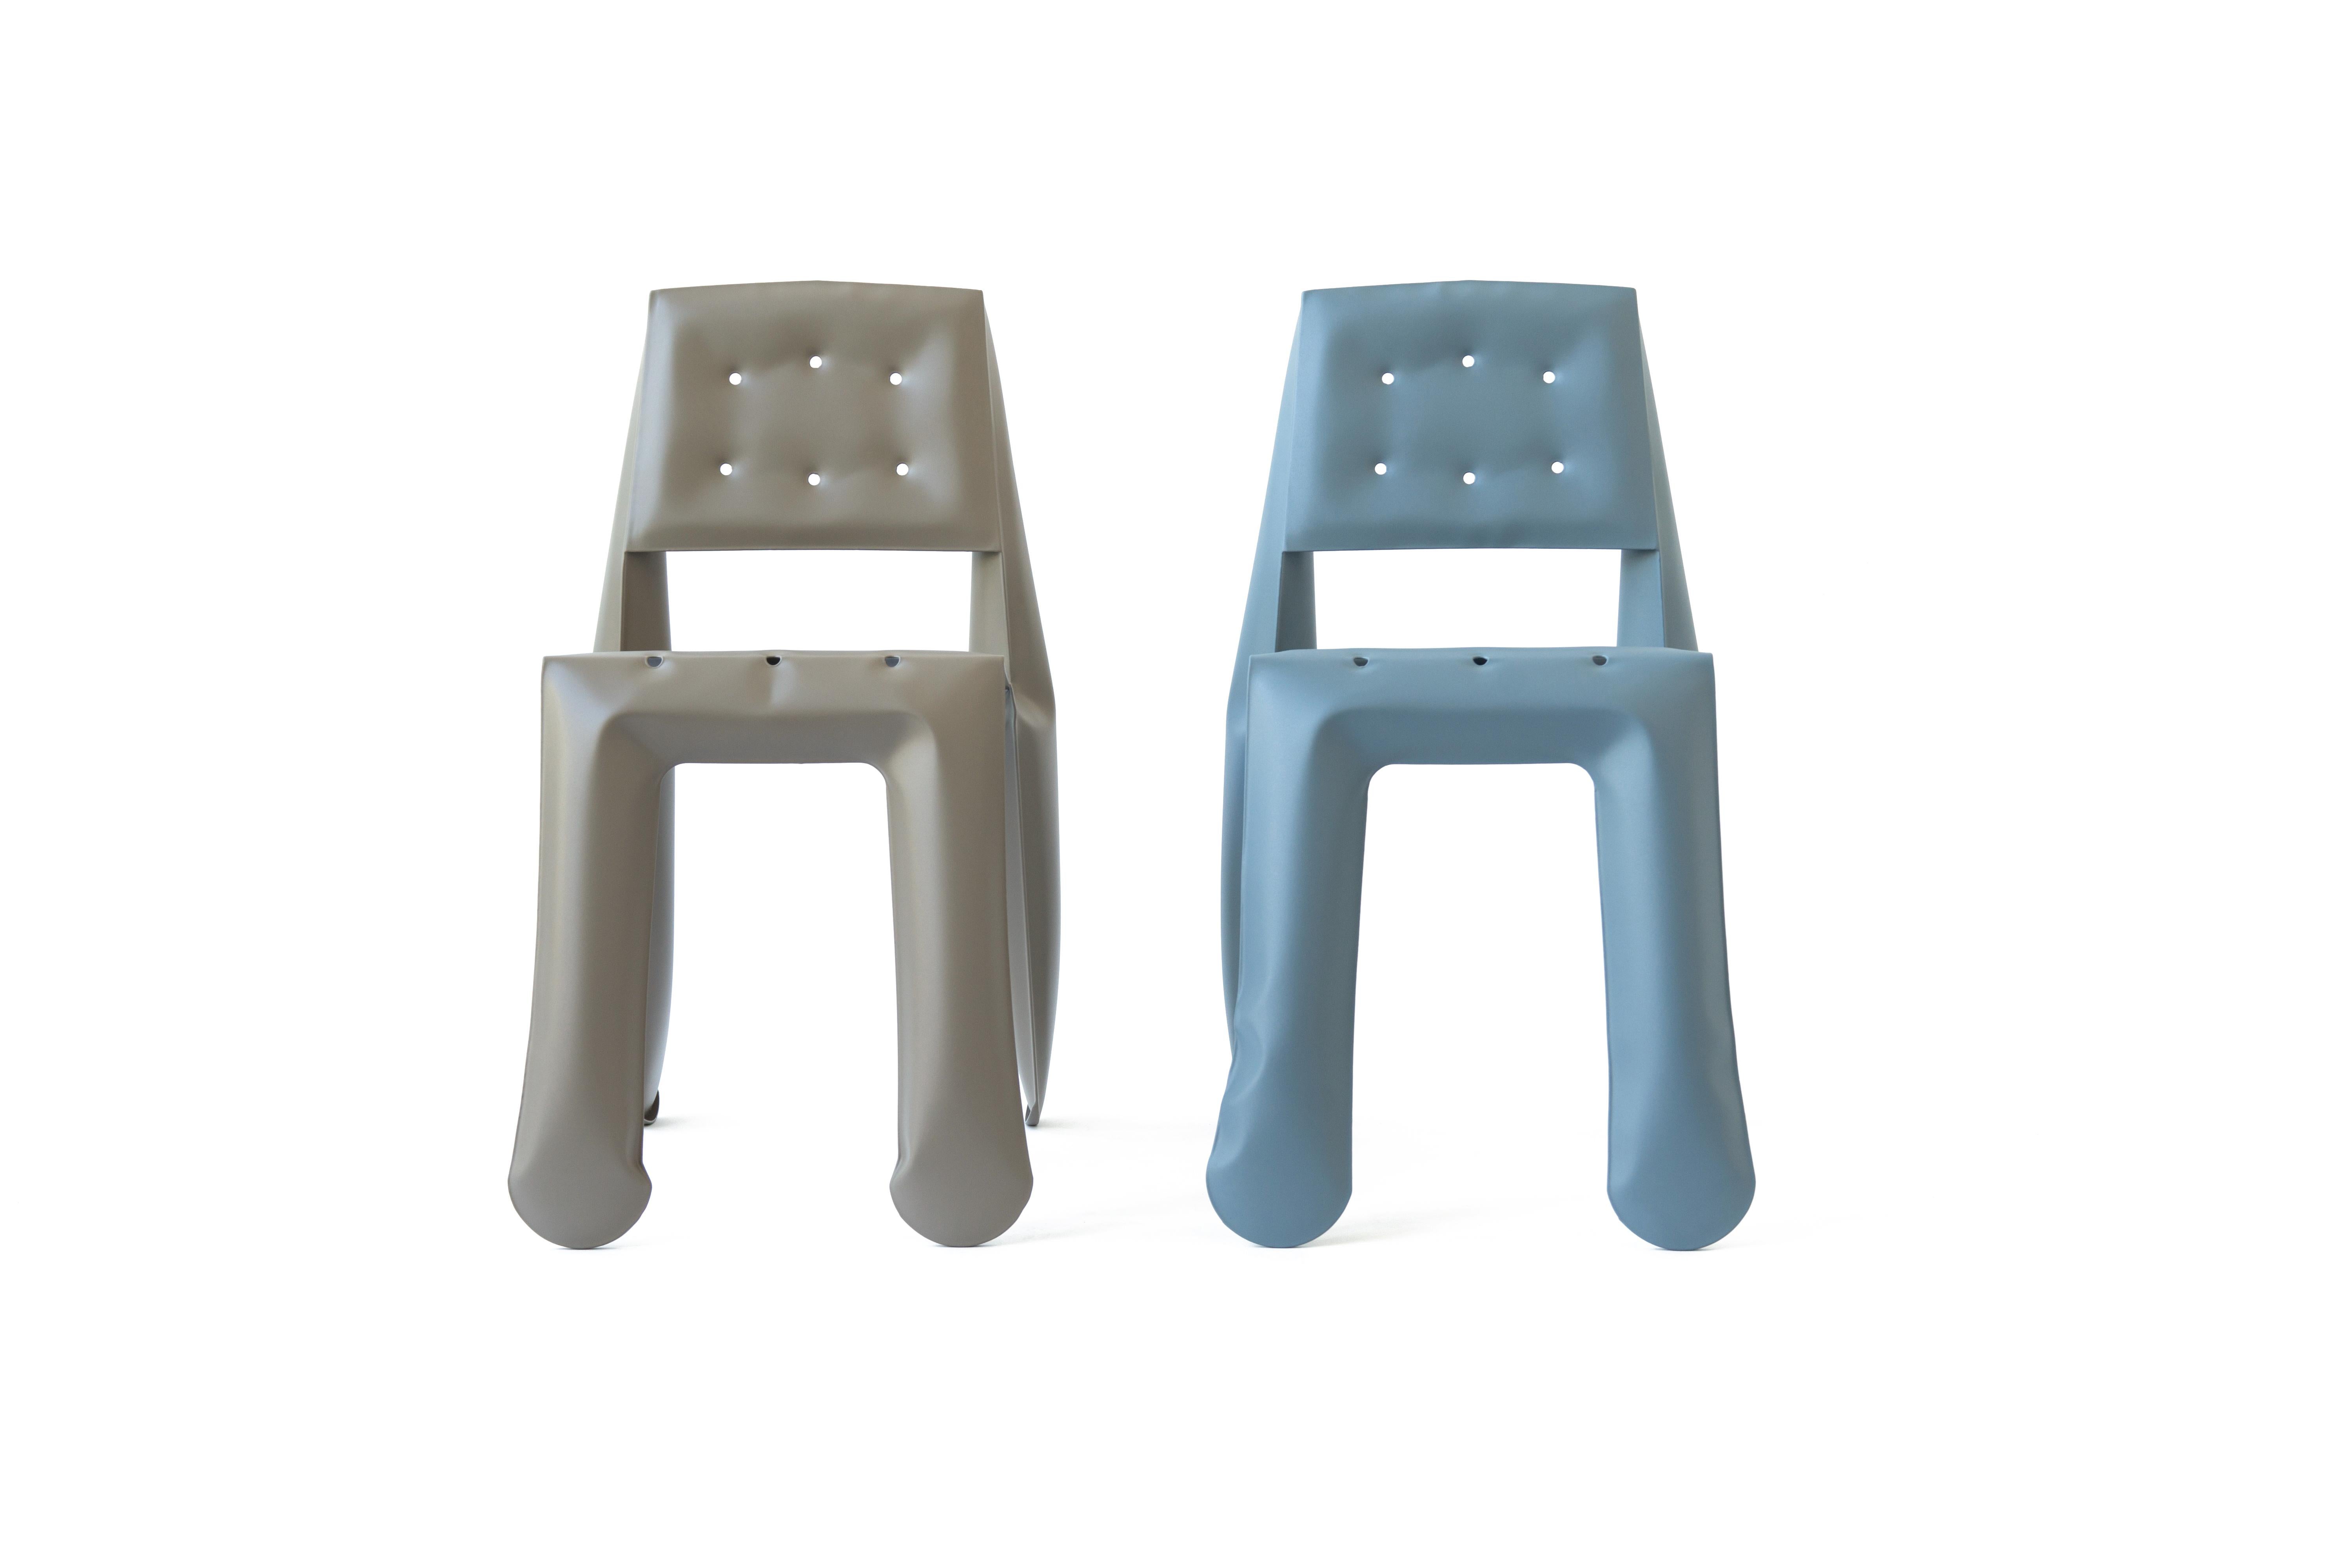 Graphite Carbon Steel Chippensteel 0.5 Sculptural Chair by Zieta For Sale 3